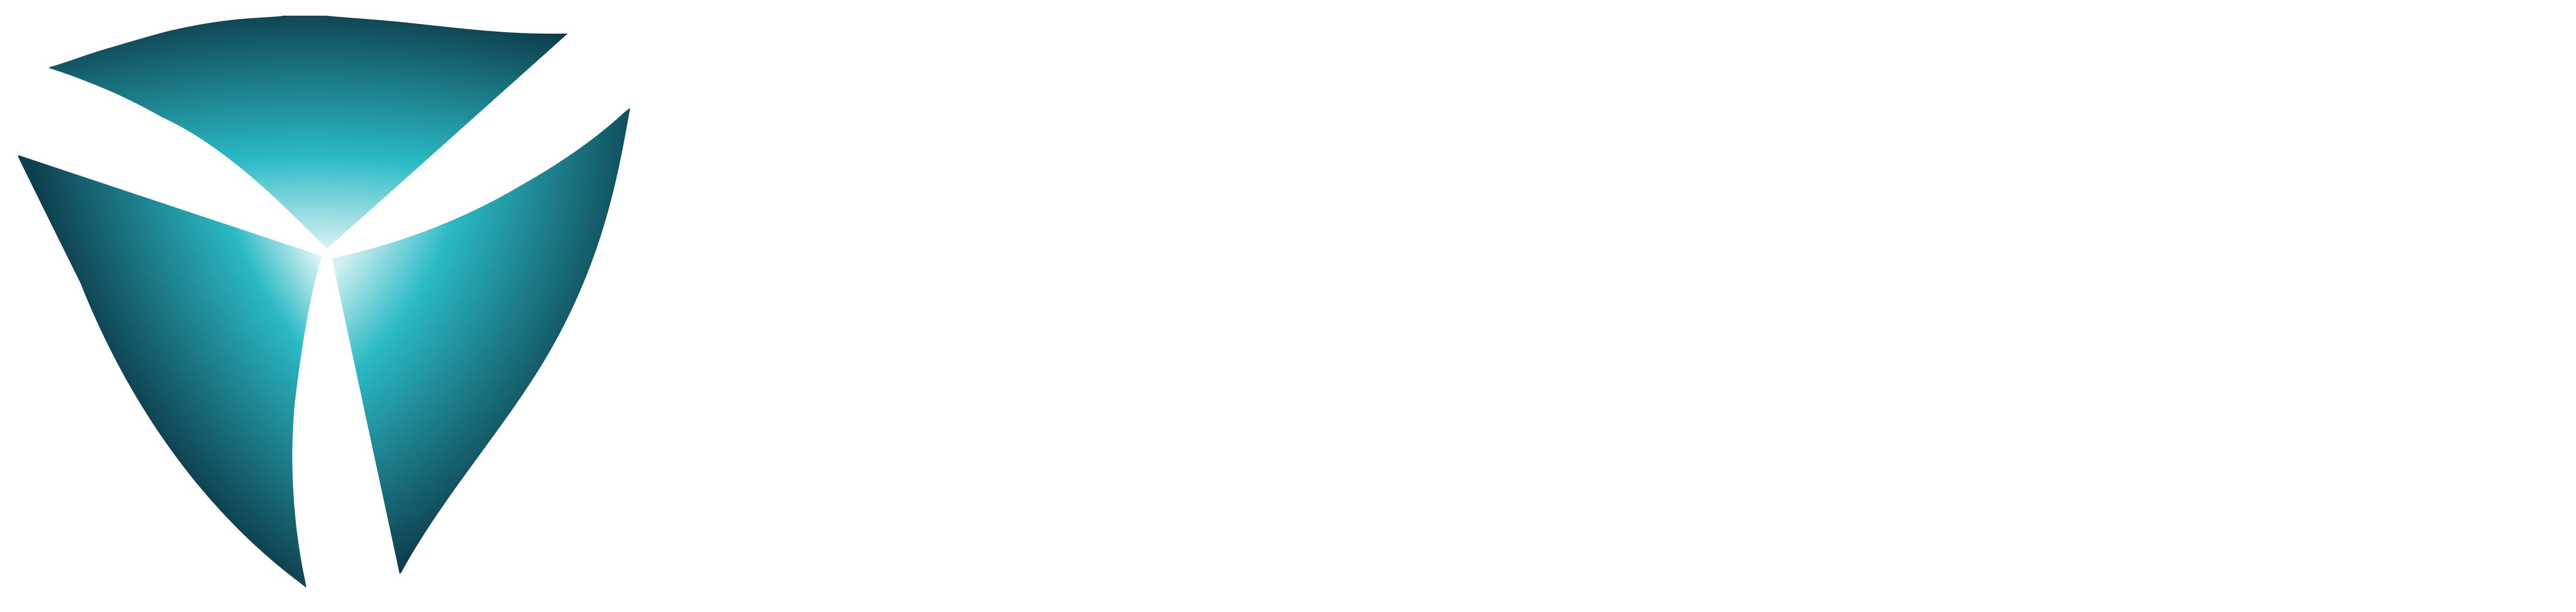 Tiziana Life Sciences logo large for dark backgrounds (transparent PNG)